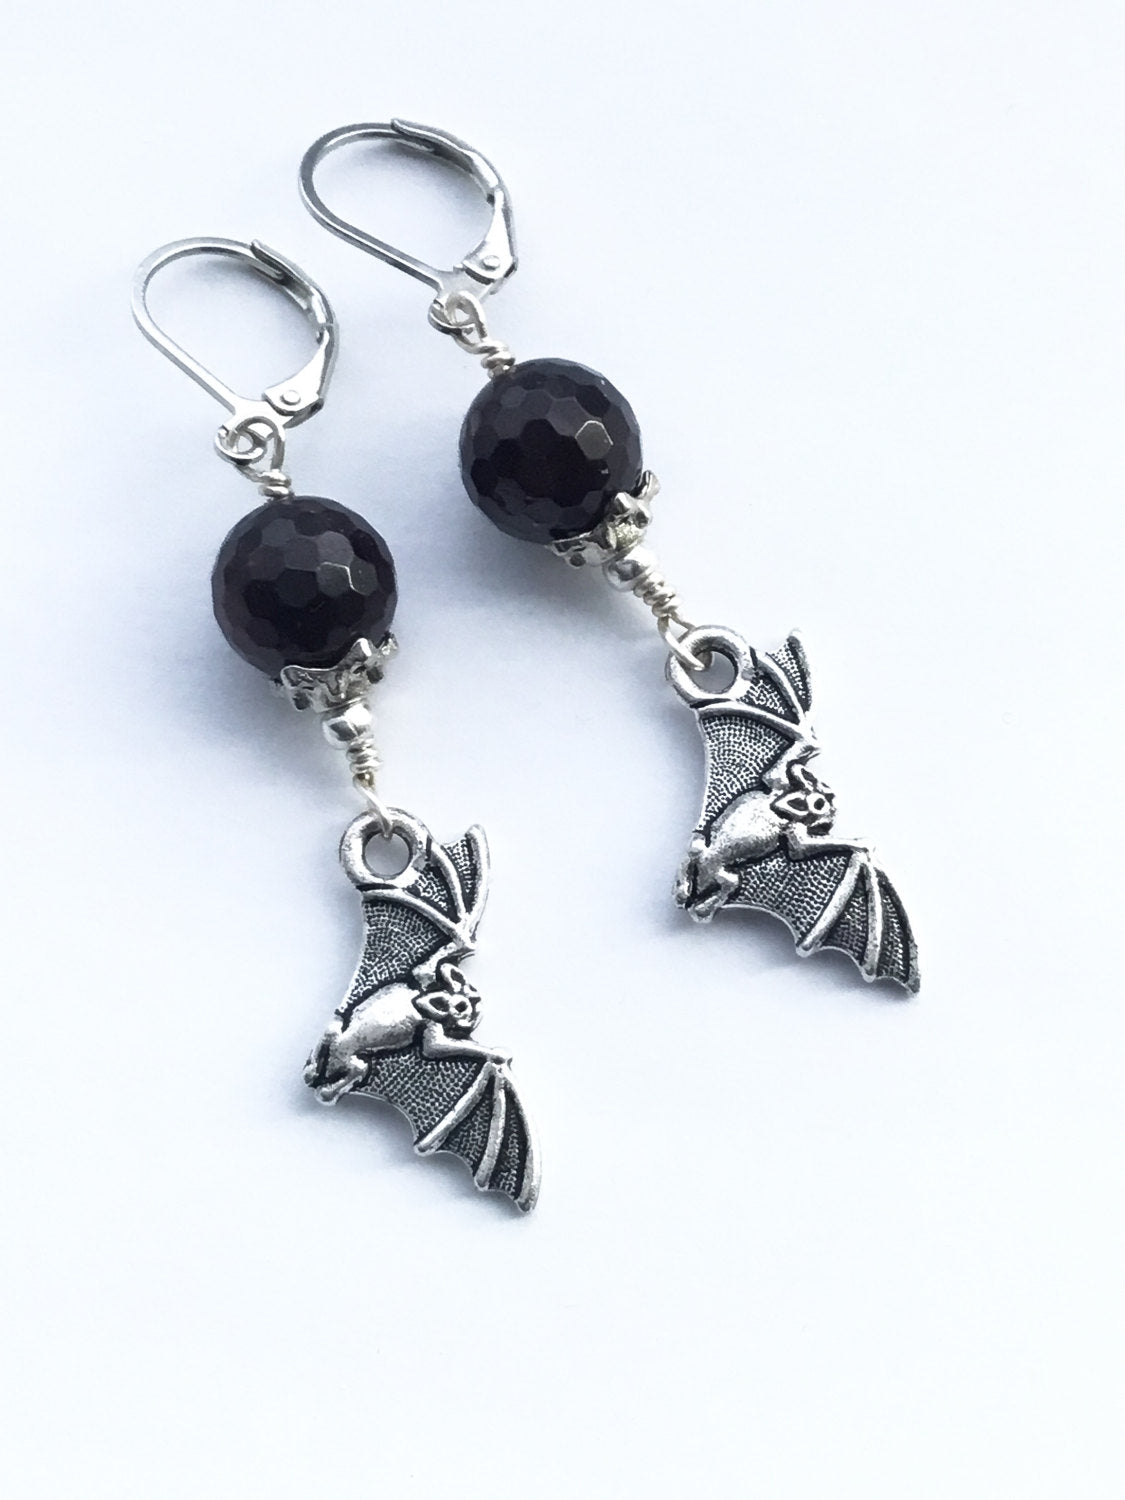 Sanguineous Blood Moon & Flying Pewter Bat Earrings. Garnet Beads. 925/Titanium Ear-wire Options - Darkmoon Fayre